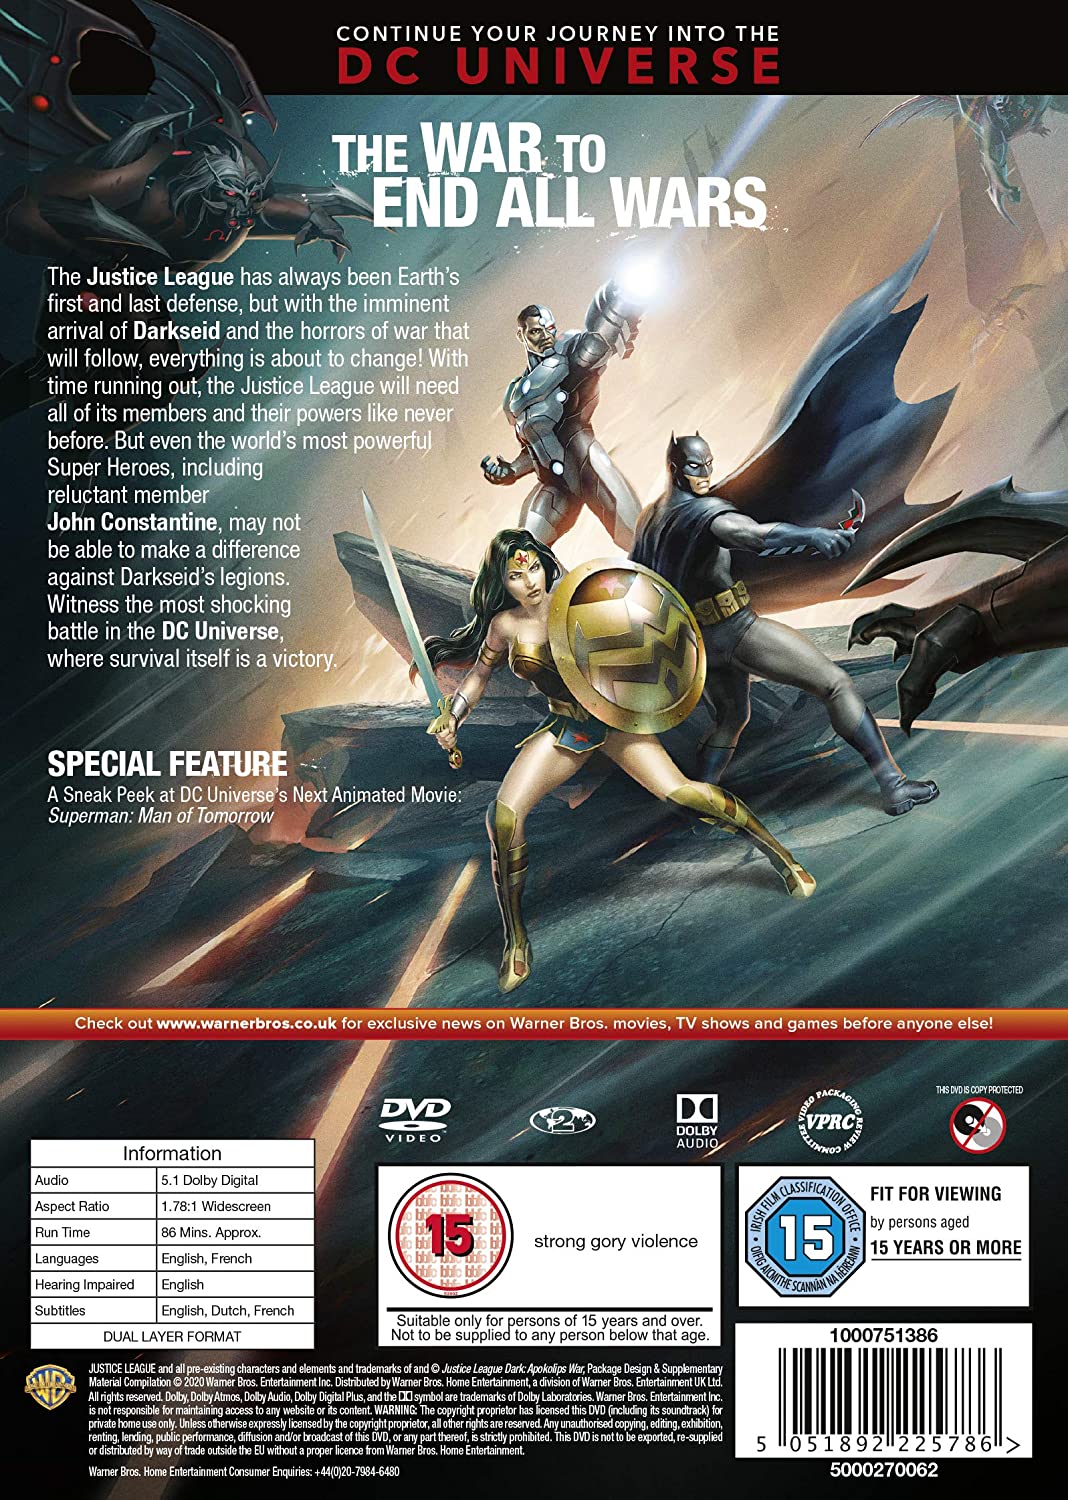 Justice League Dark: Apokalips War (DVD) (2020)